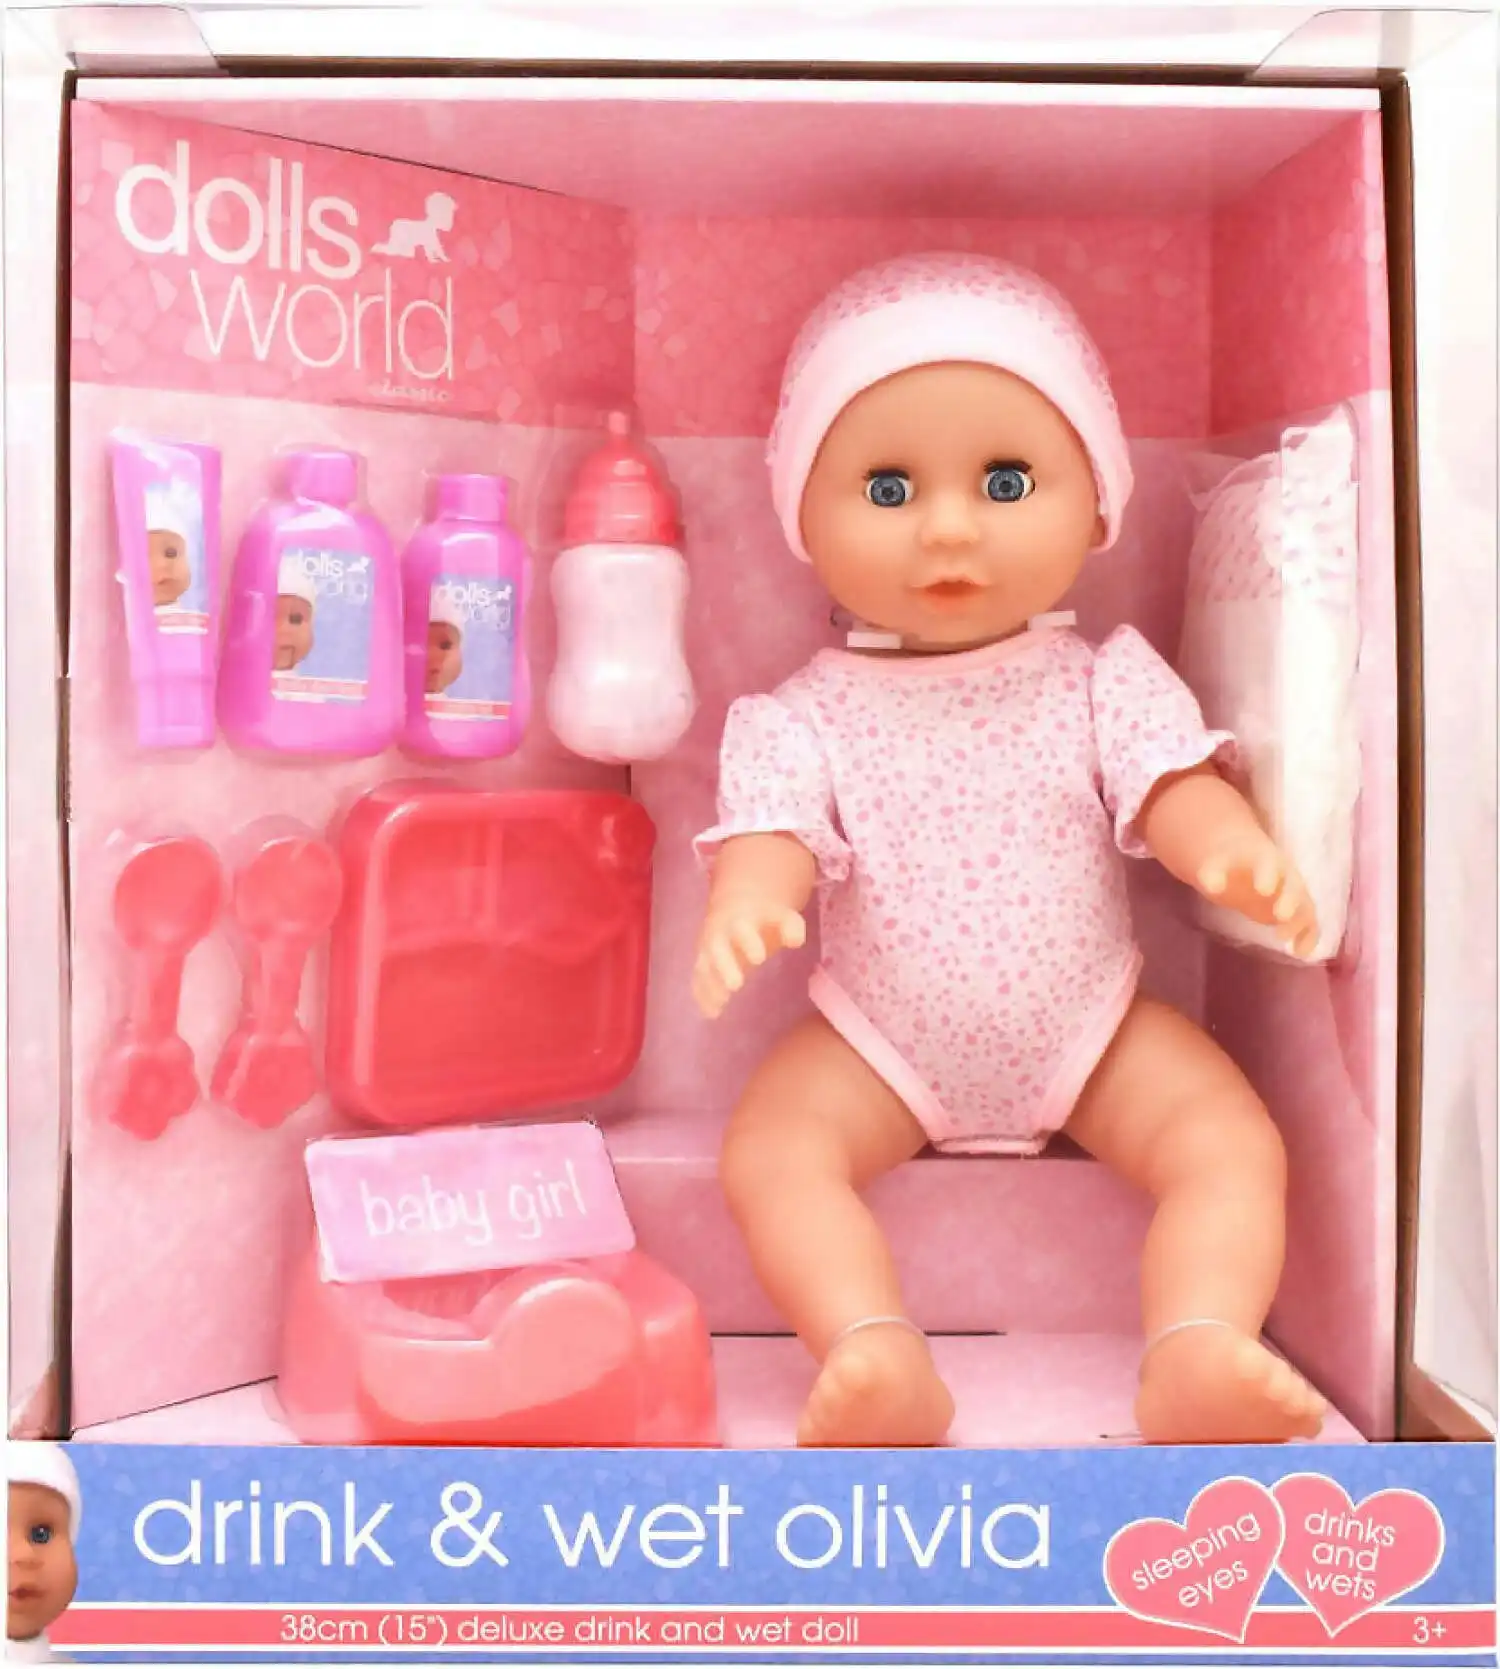 Dollsworld - Drink & Wet Olivia 38cm Deluxe Drink And Wet Doll